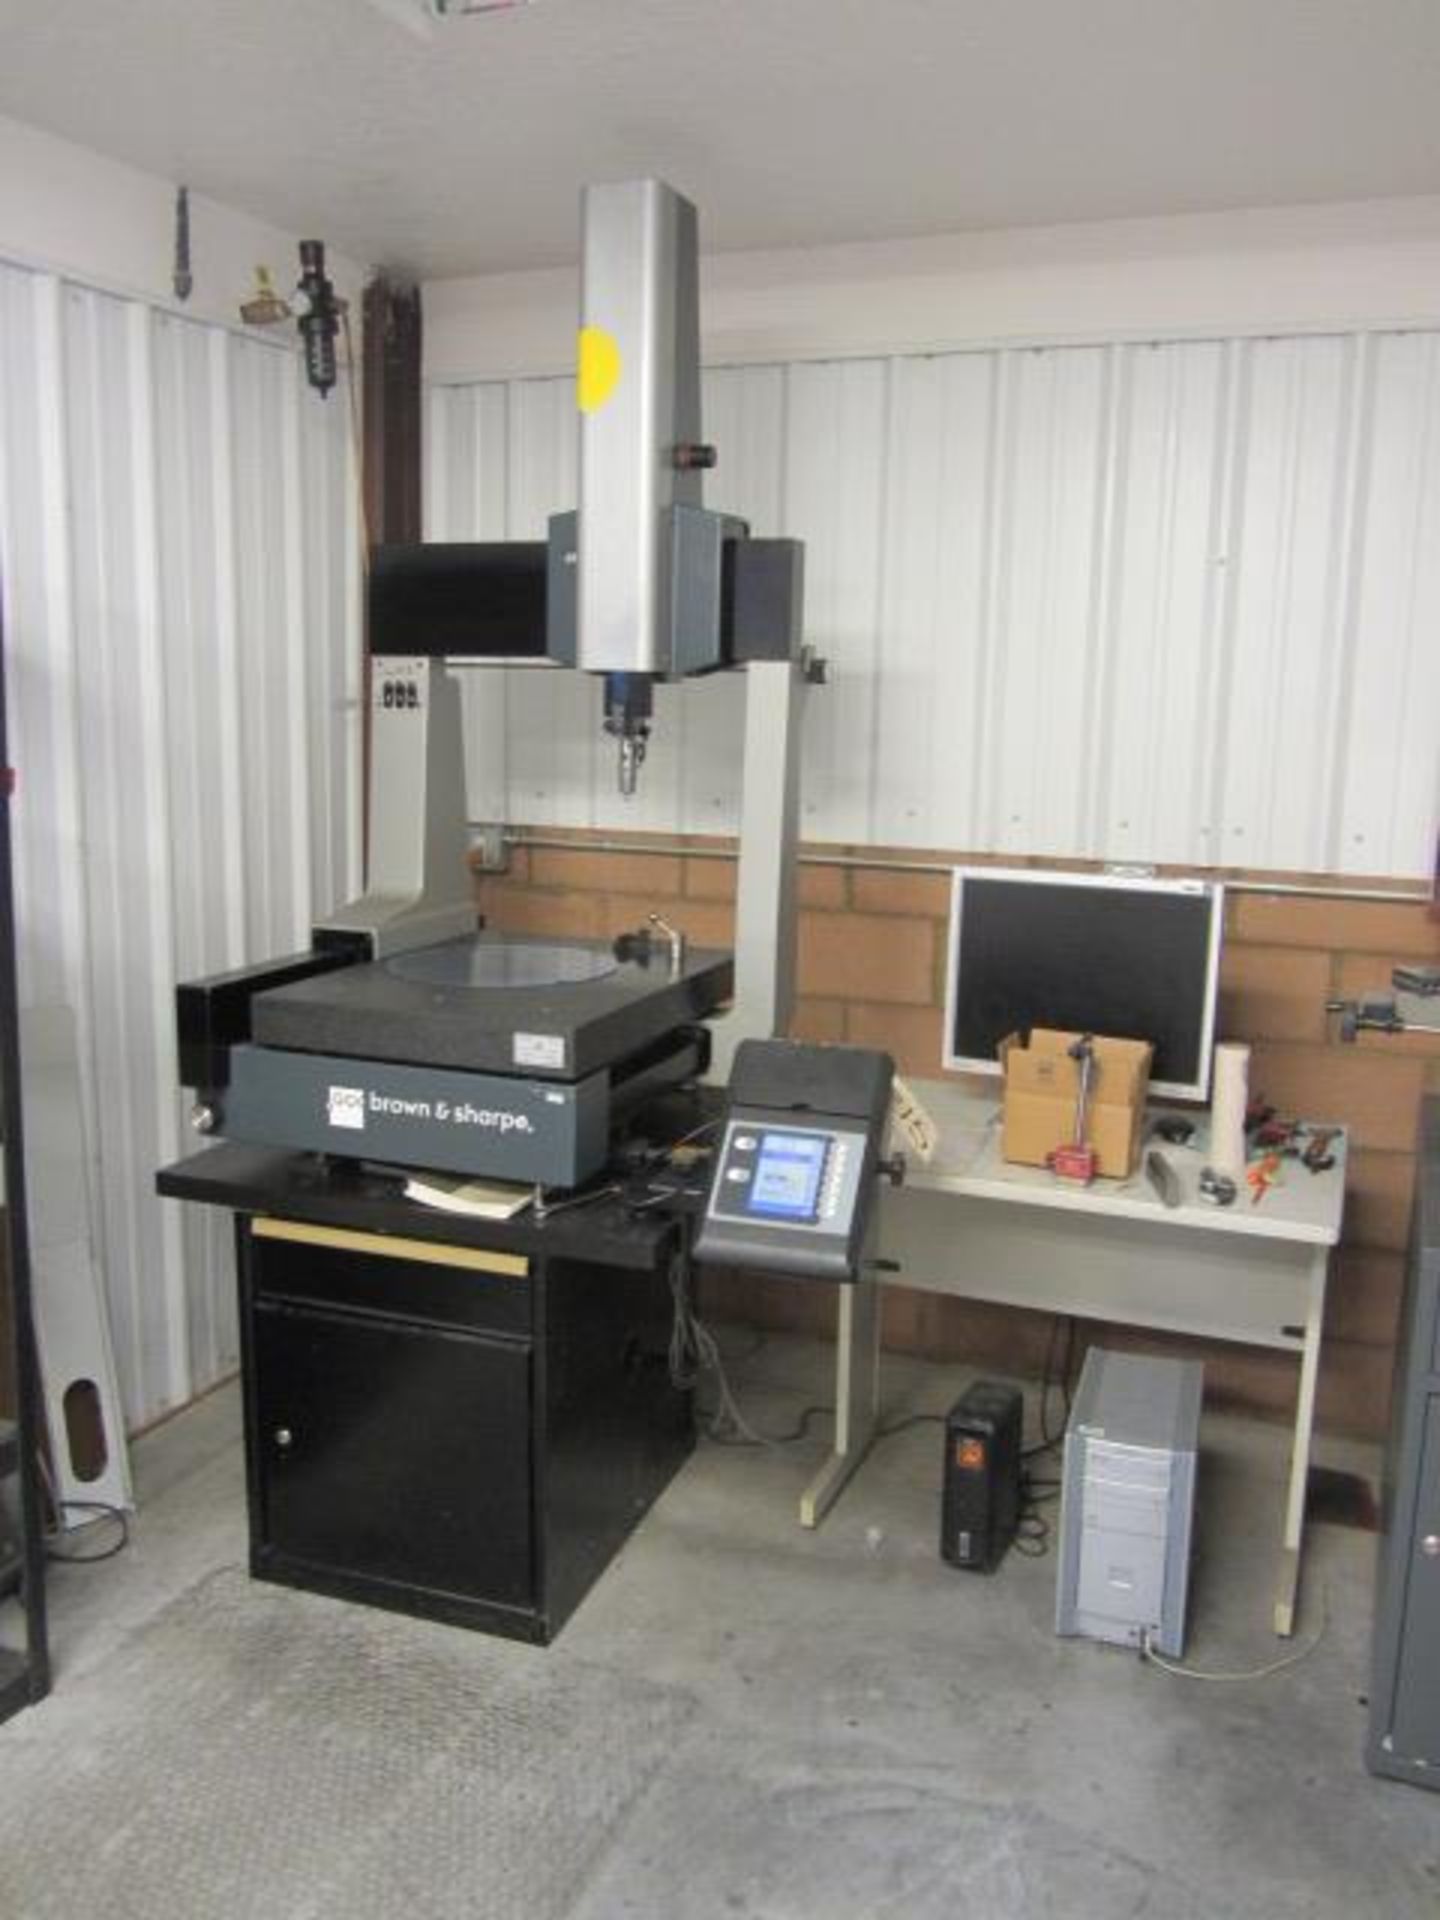 Brown & Sharpe Gage 2000 Coordinate Measuring Machine with PLC Control, Printer, Probe, sn:0604- - Image 4 of 8